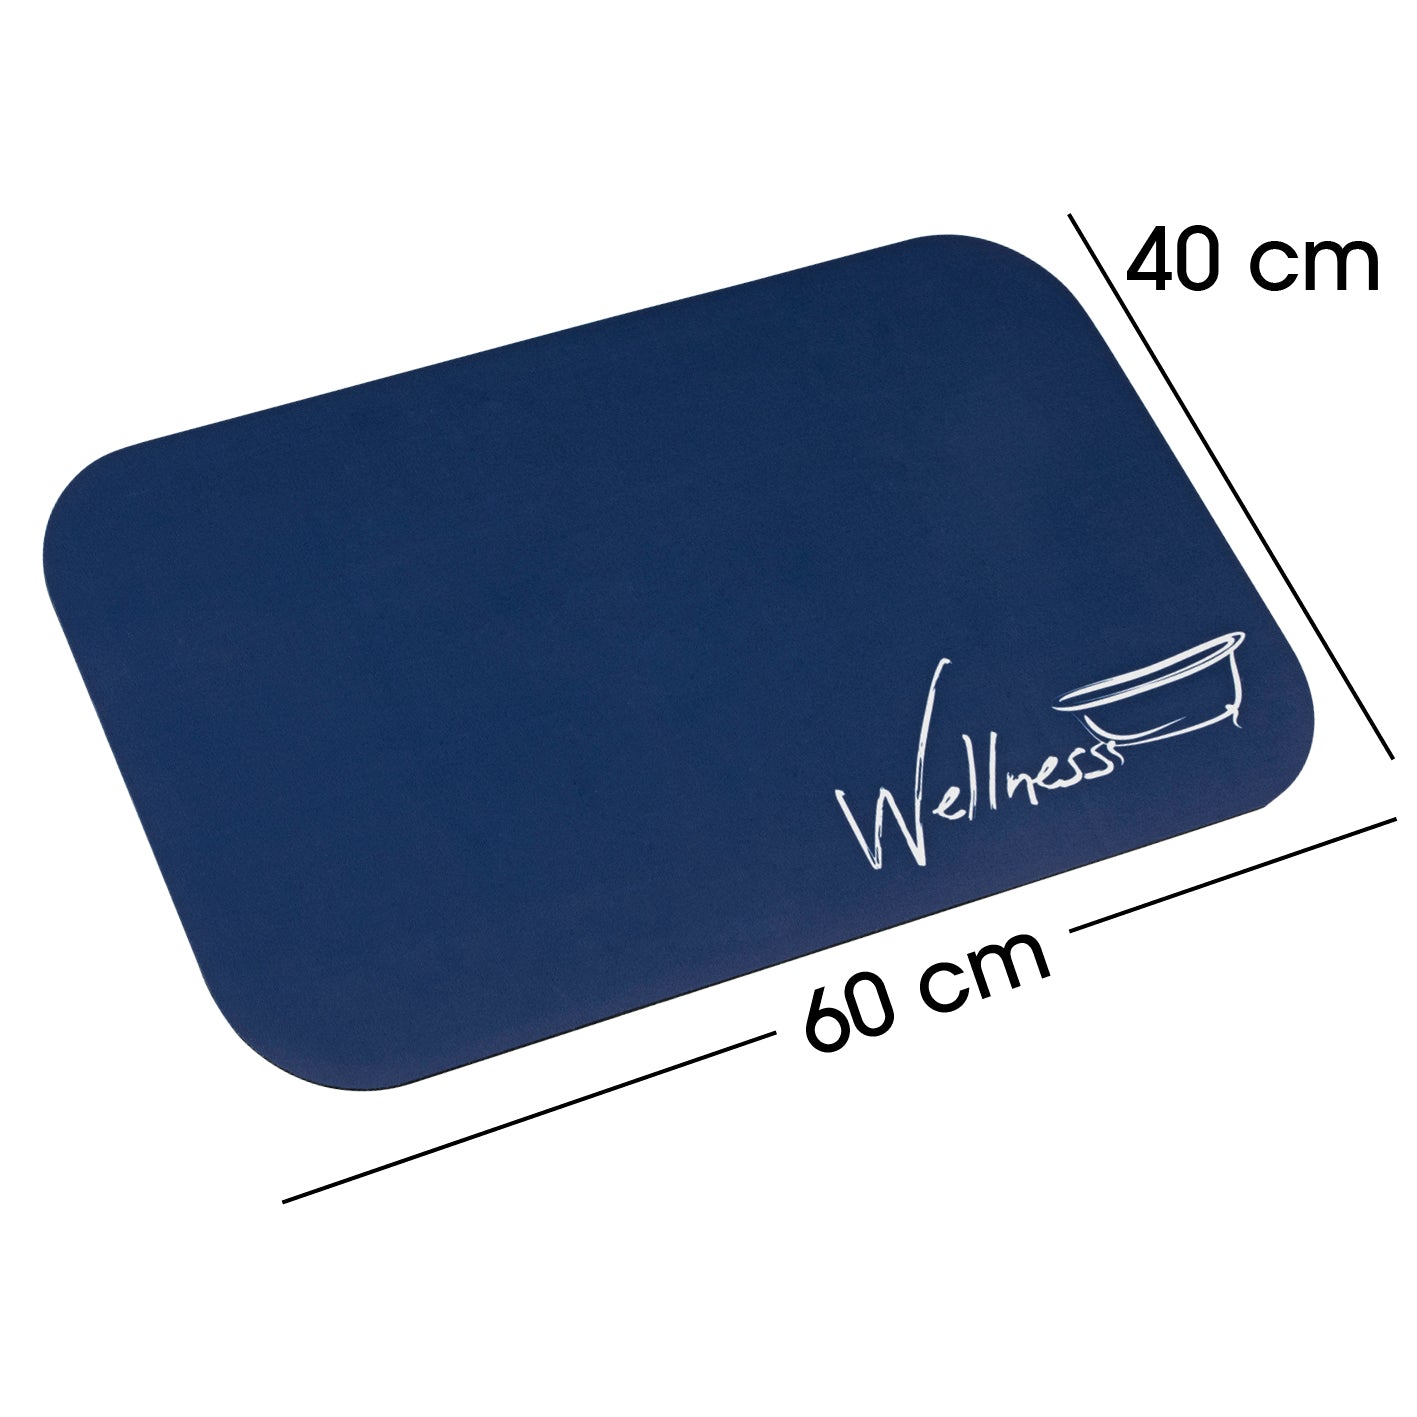 Badematte Wellness - 40x60 cm - blau